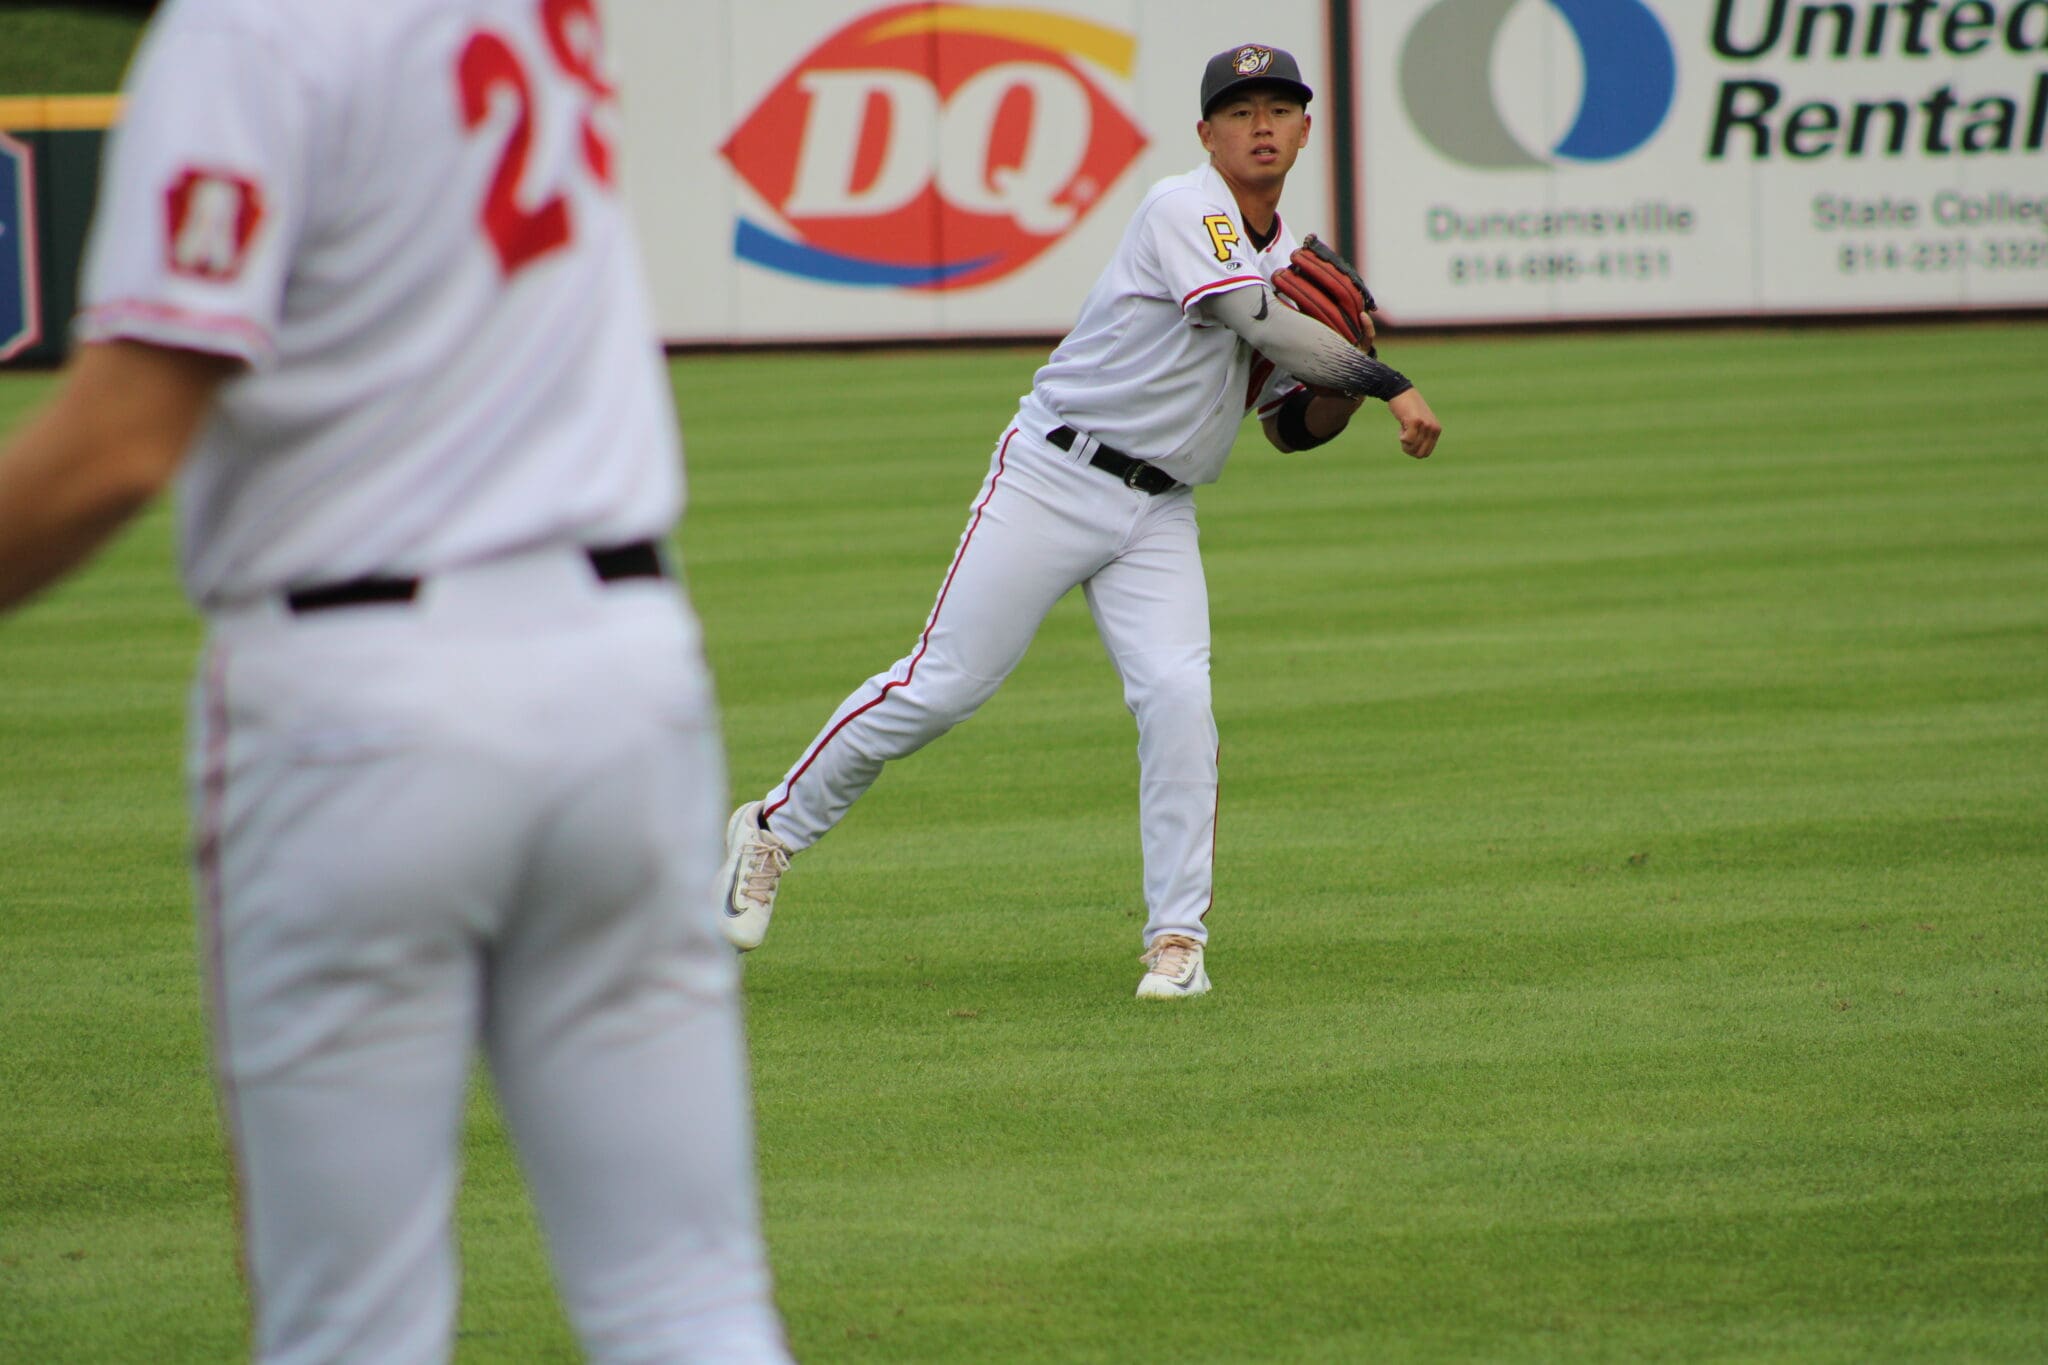 Pirates minor league infielder Tsung-Che Cheng makes a throw.